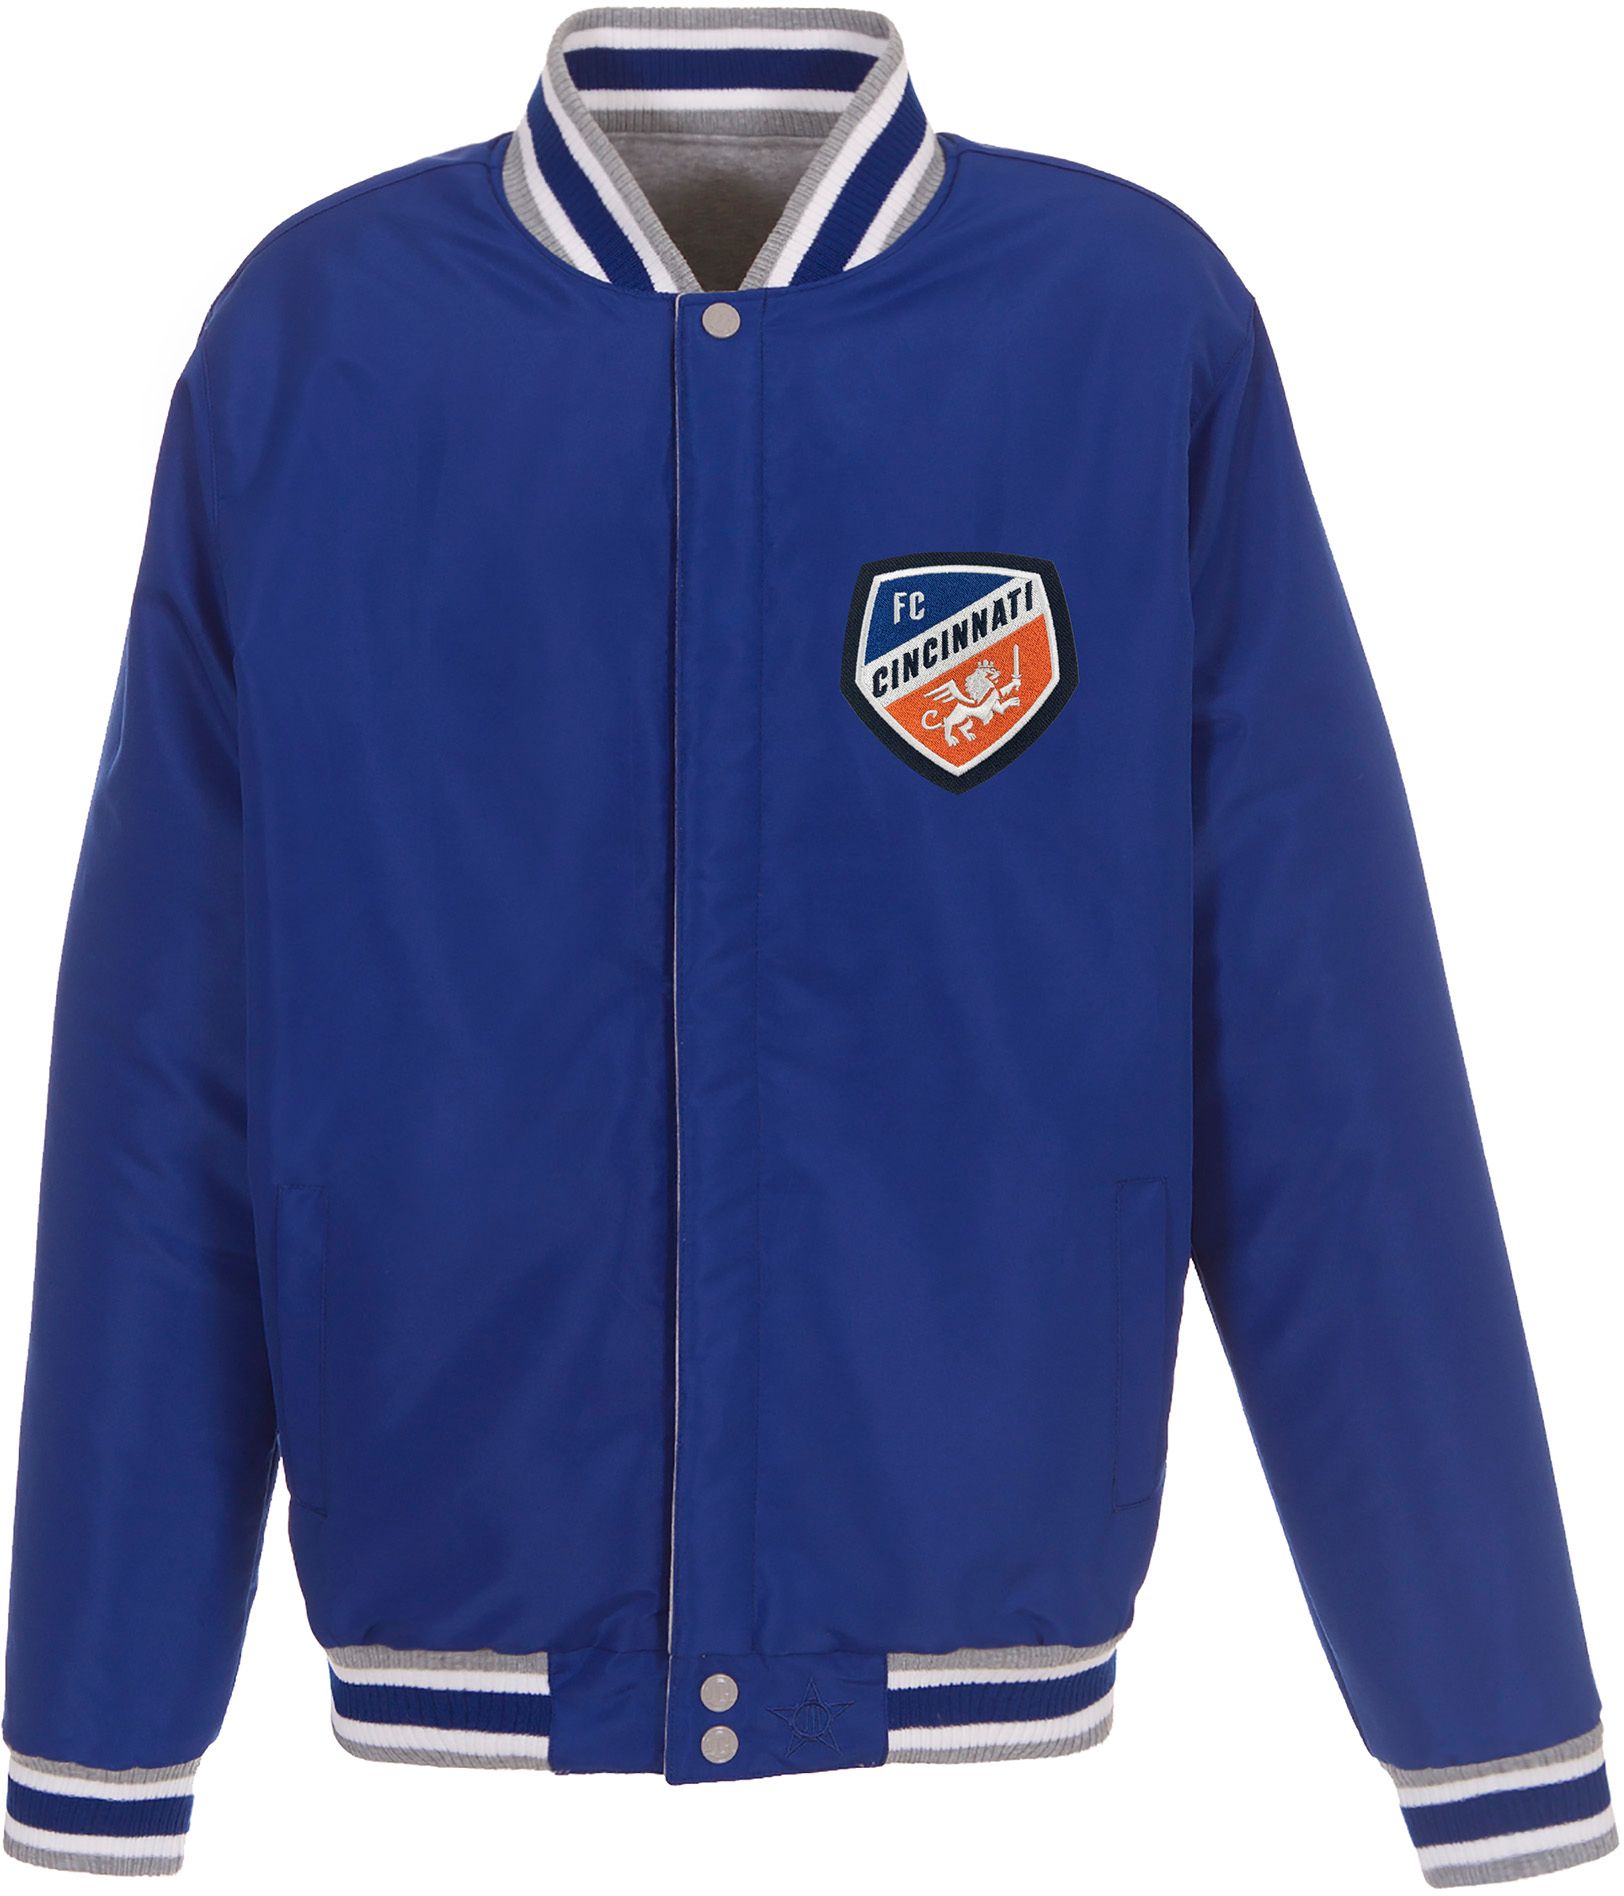 JH Design FC Cincinnati Blue Reversible Fleece Jacket